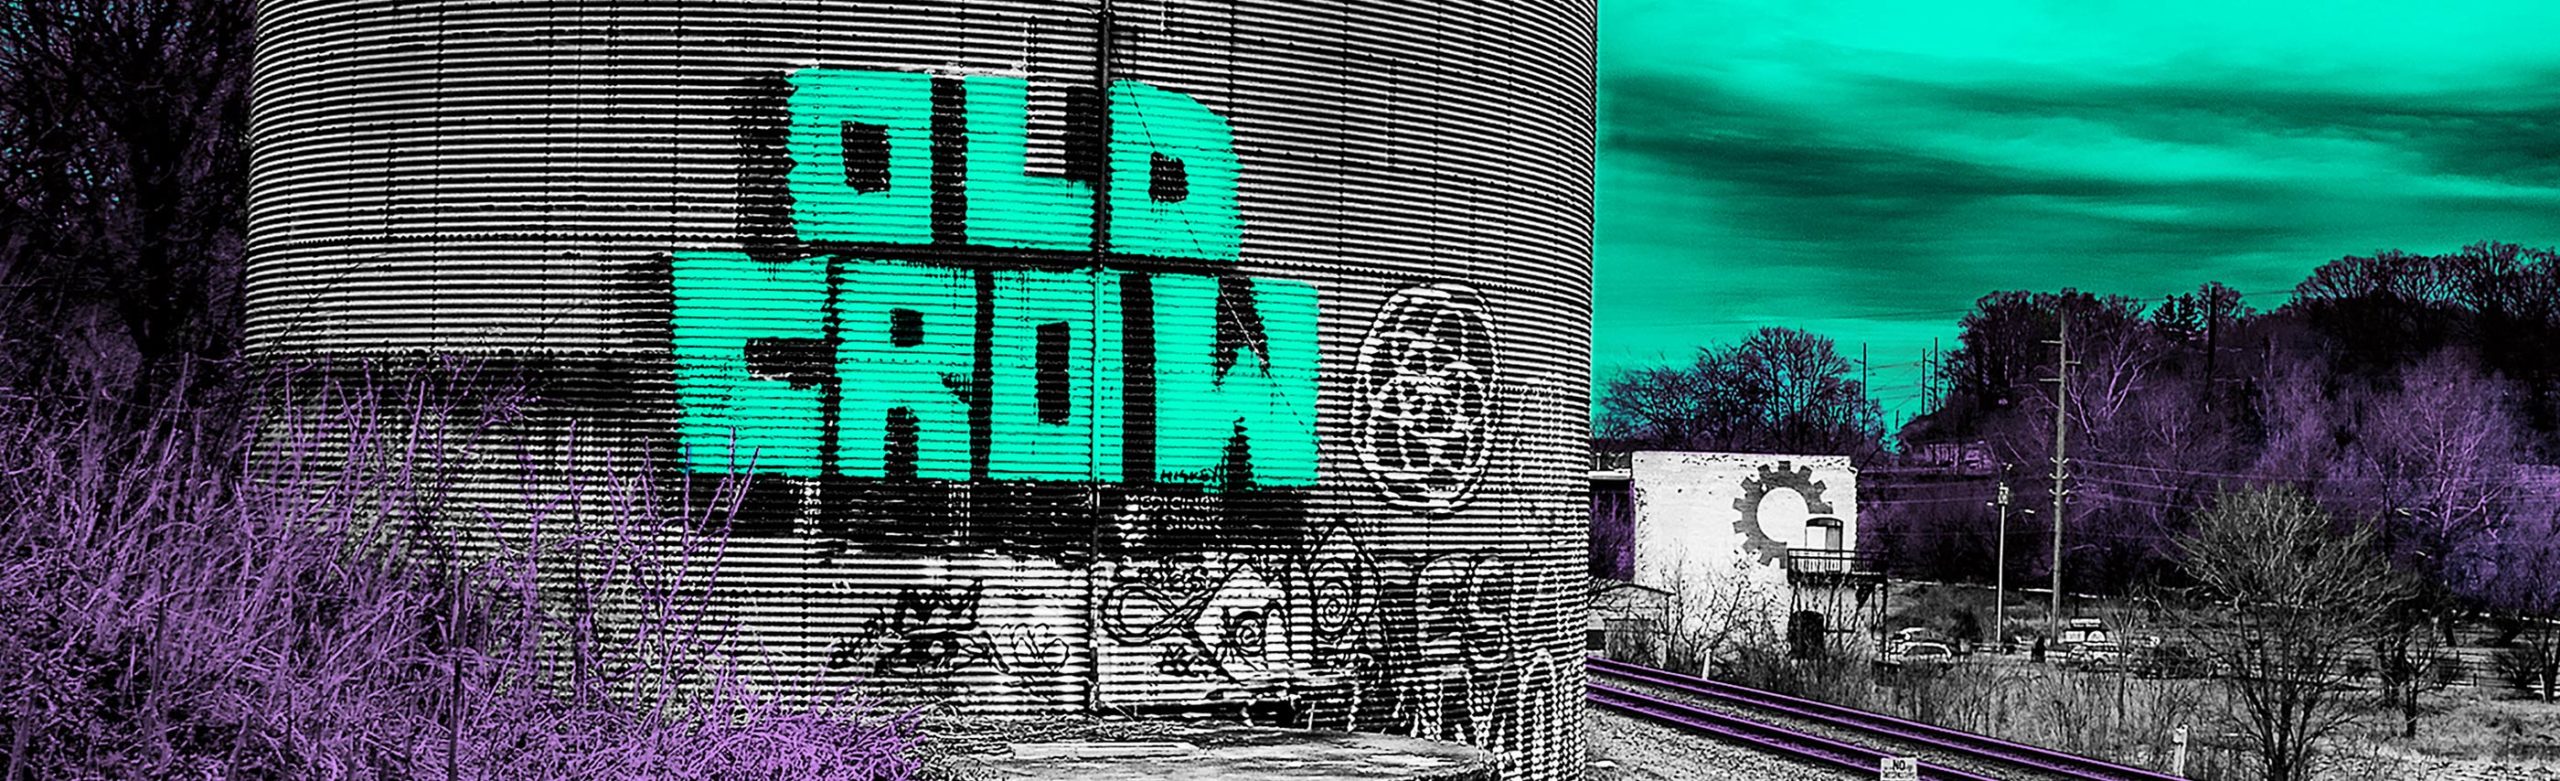 Old Crow Medicine Show Announces Paint This Town Tour Stops at KettleHouse Amphitheater & The ELM Image